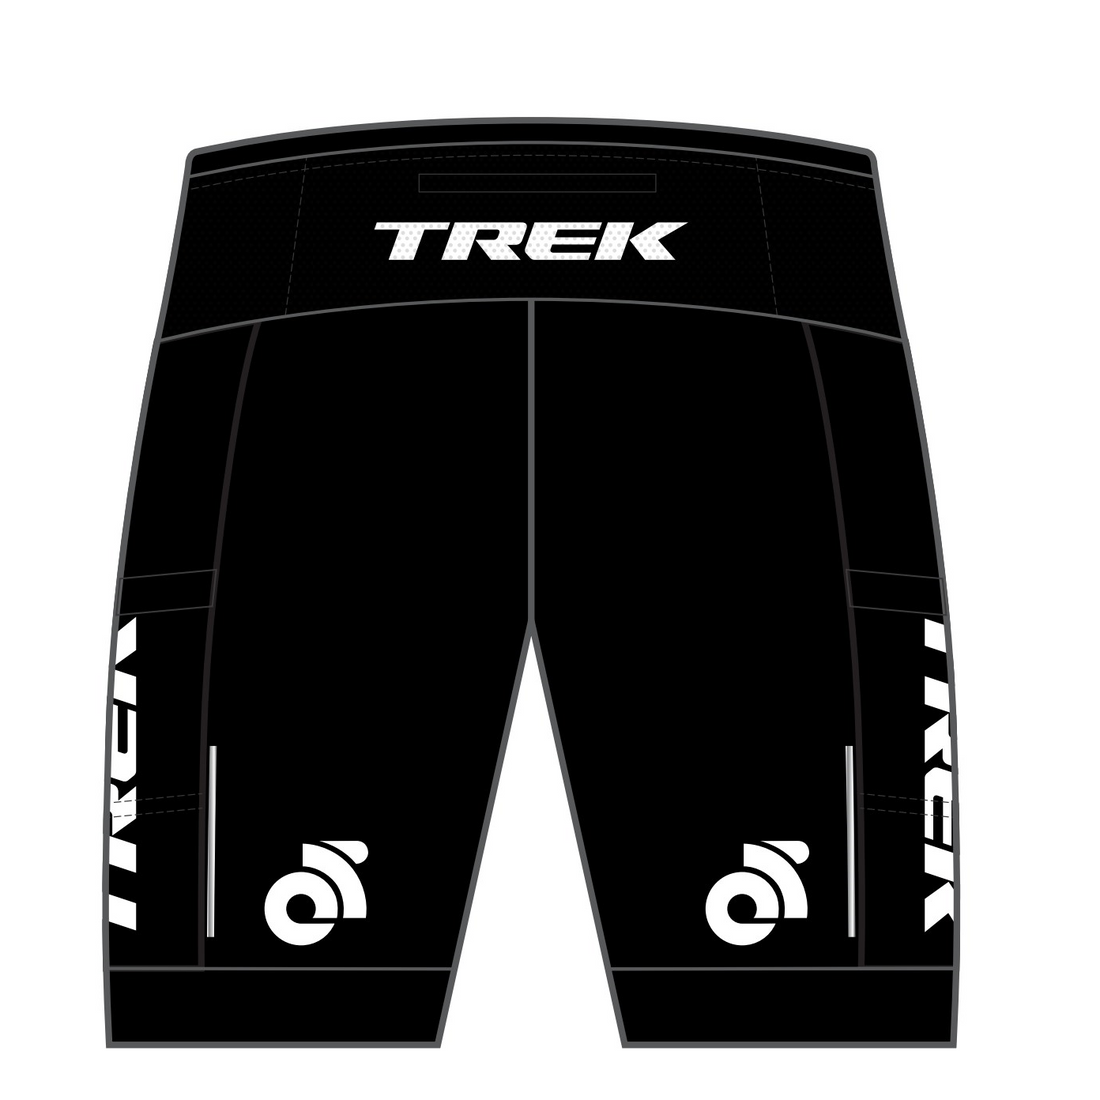 APEX+ Ultra Race Shorts